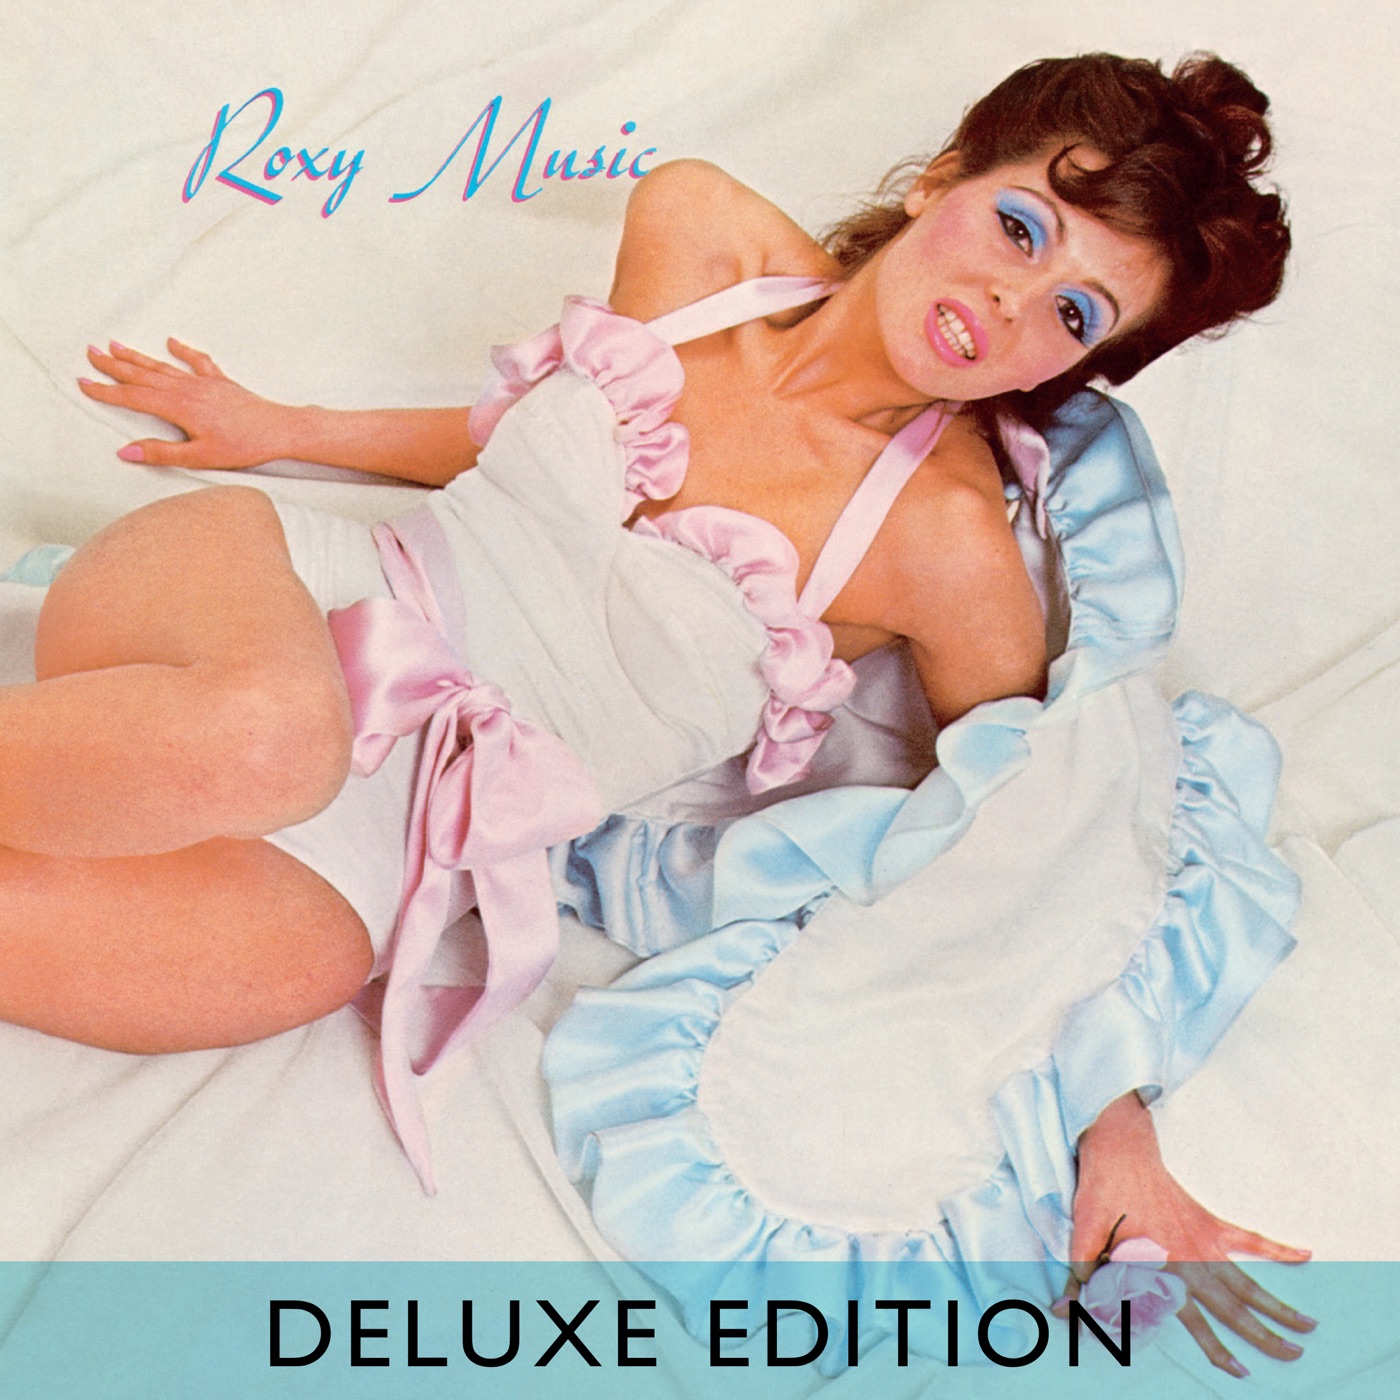 Roxy Music by Roxy Music